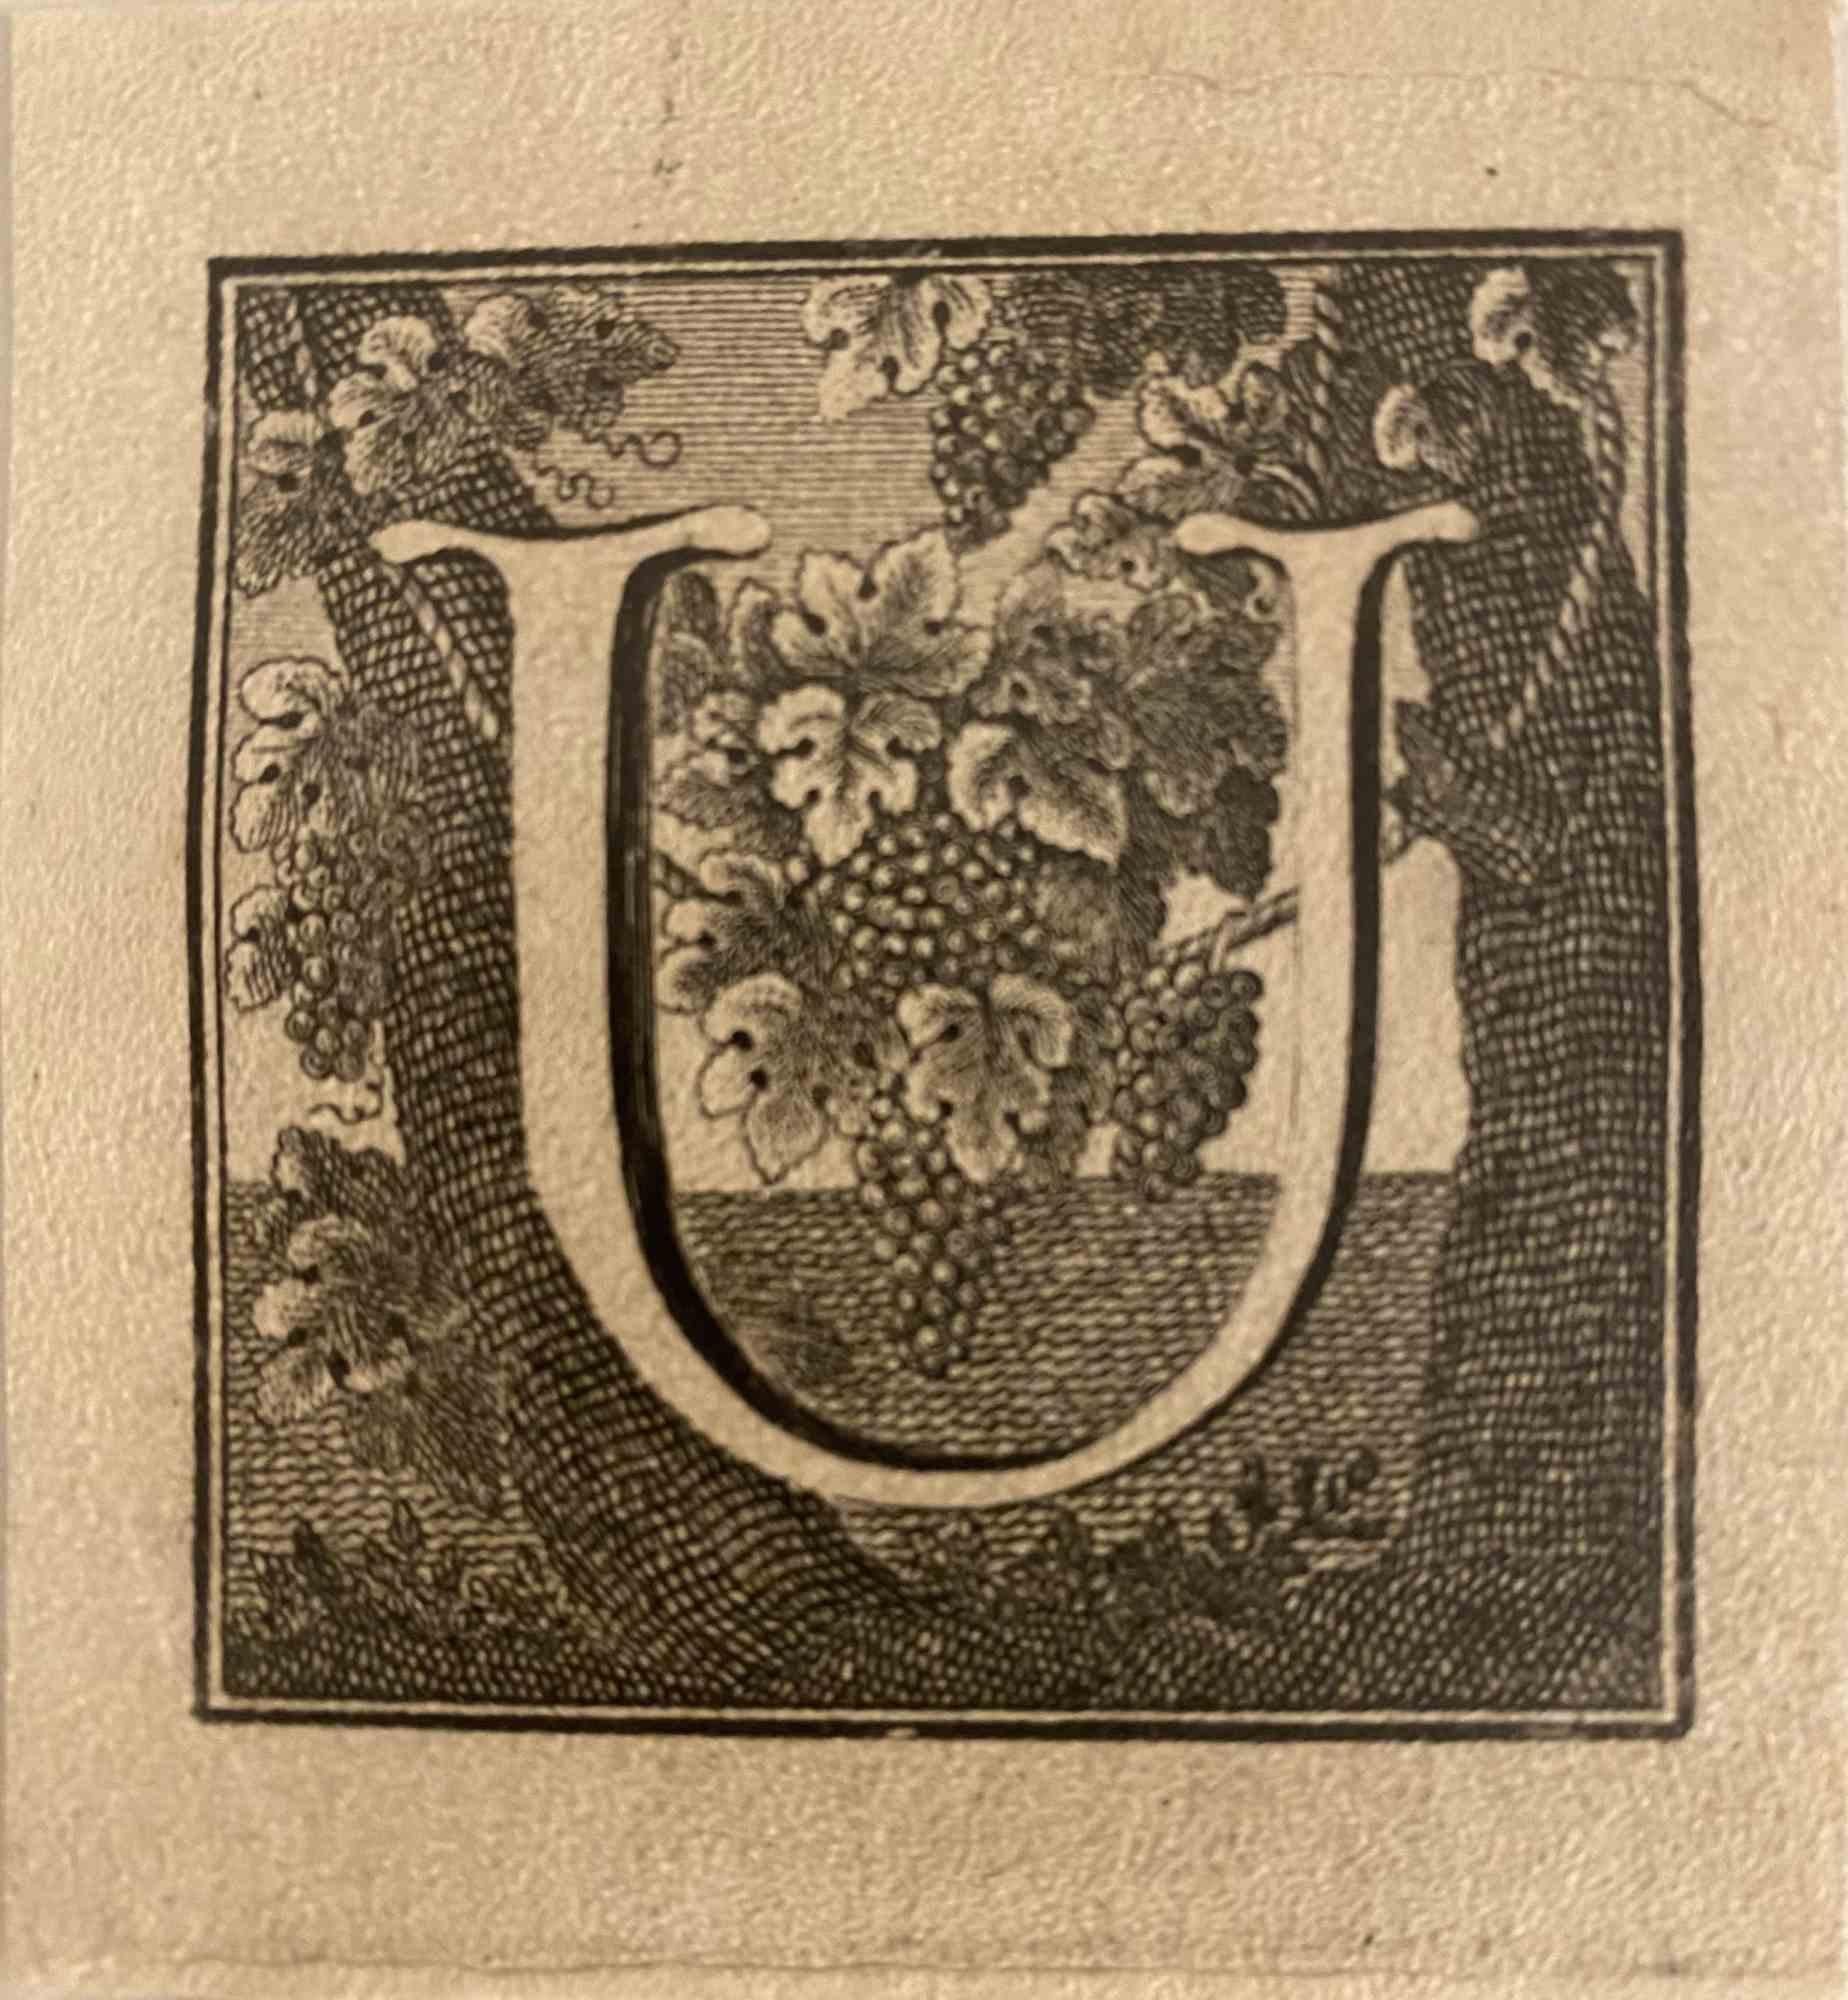 18th century alphabet